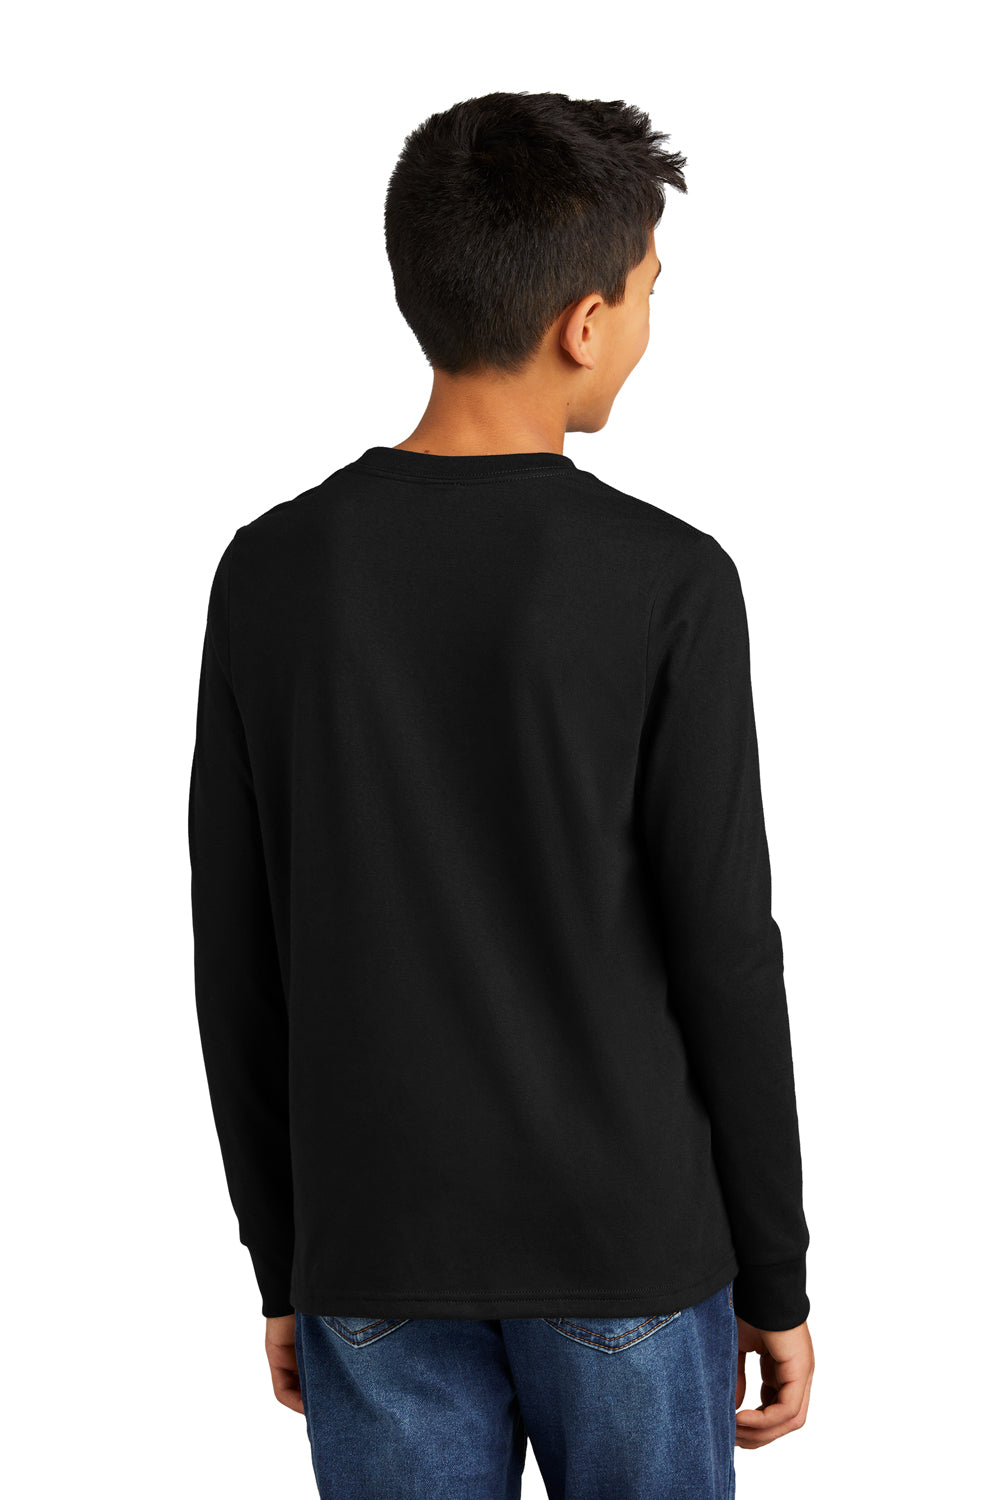 District Youth Perfect Tri Long Sleeve Crewneck T-Shirt Black Back